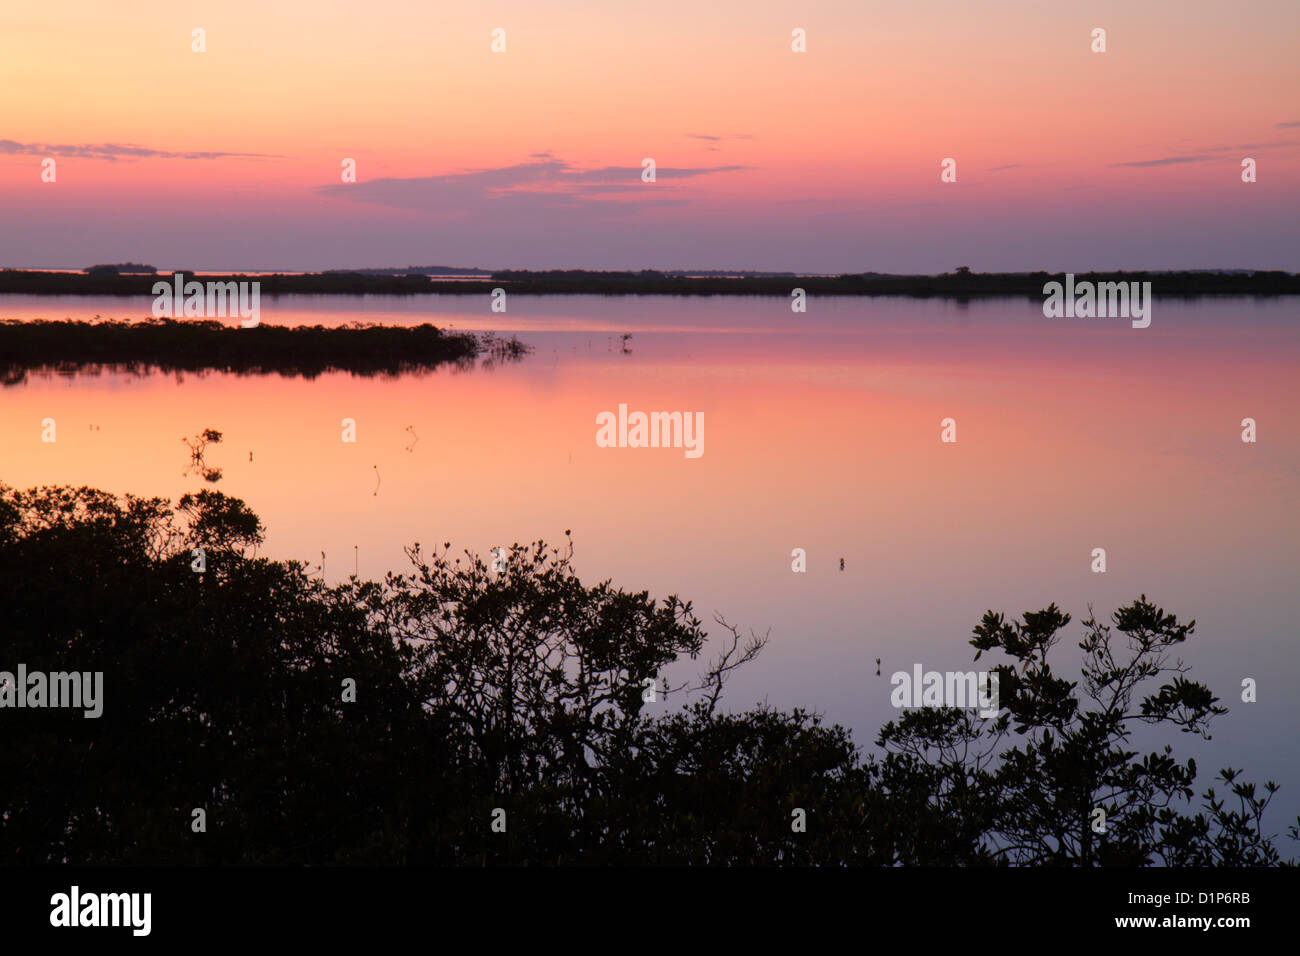 Florida Florida Keys,US highway Route 1 One,Overseas Highway,Key West,Saddlebunch Keys,mangrove,water,Gulf of Mexico Coast,dusk,sunset,scenic,natural, Stock Photo